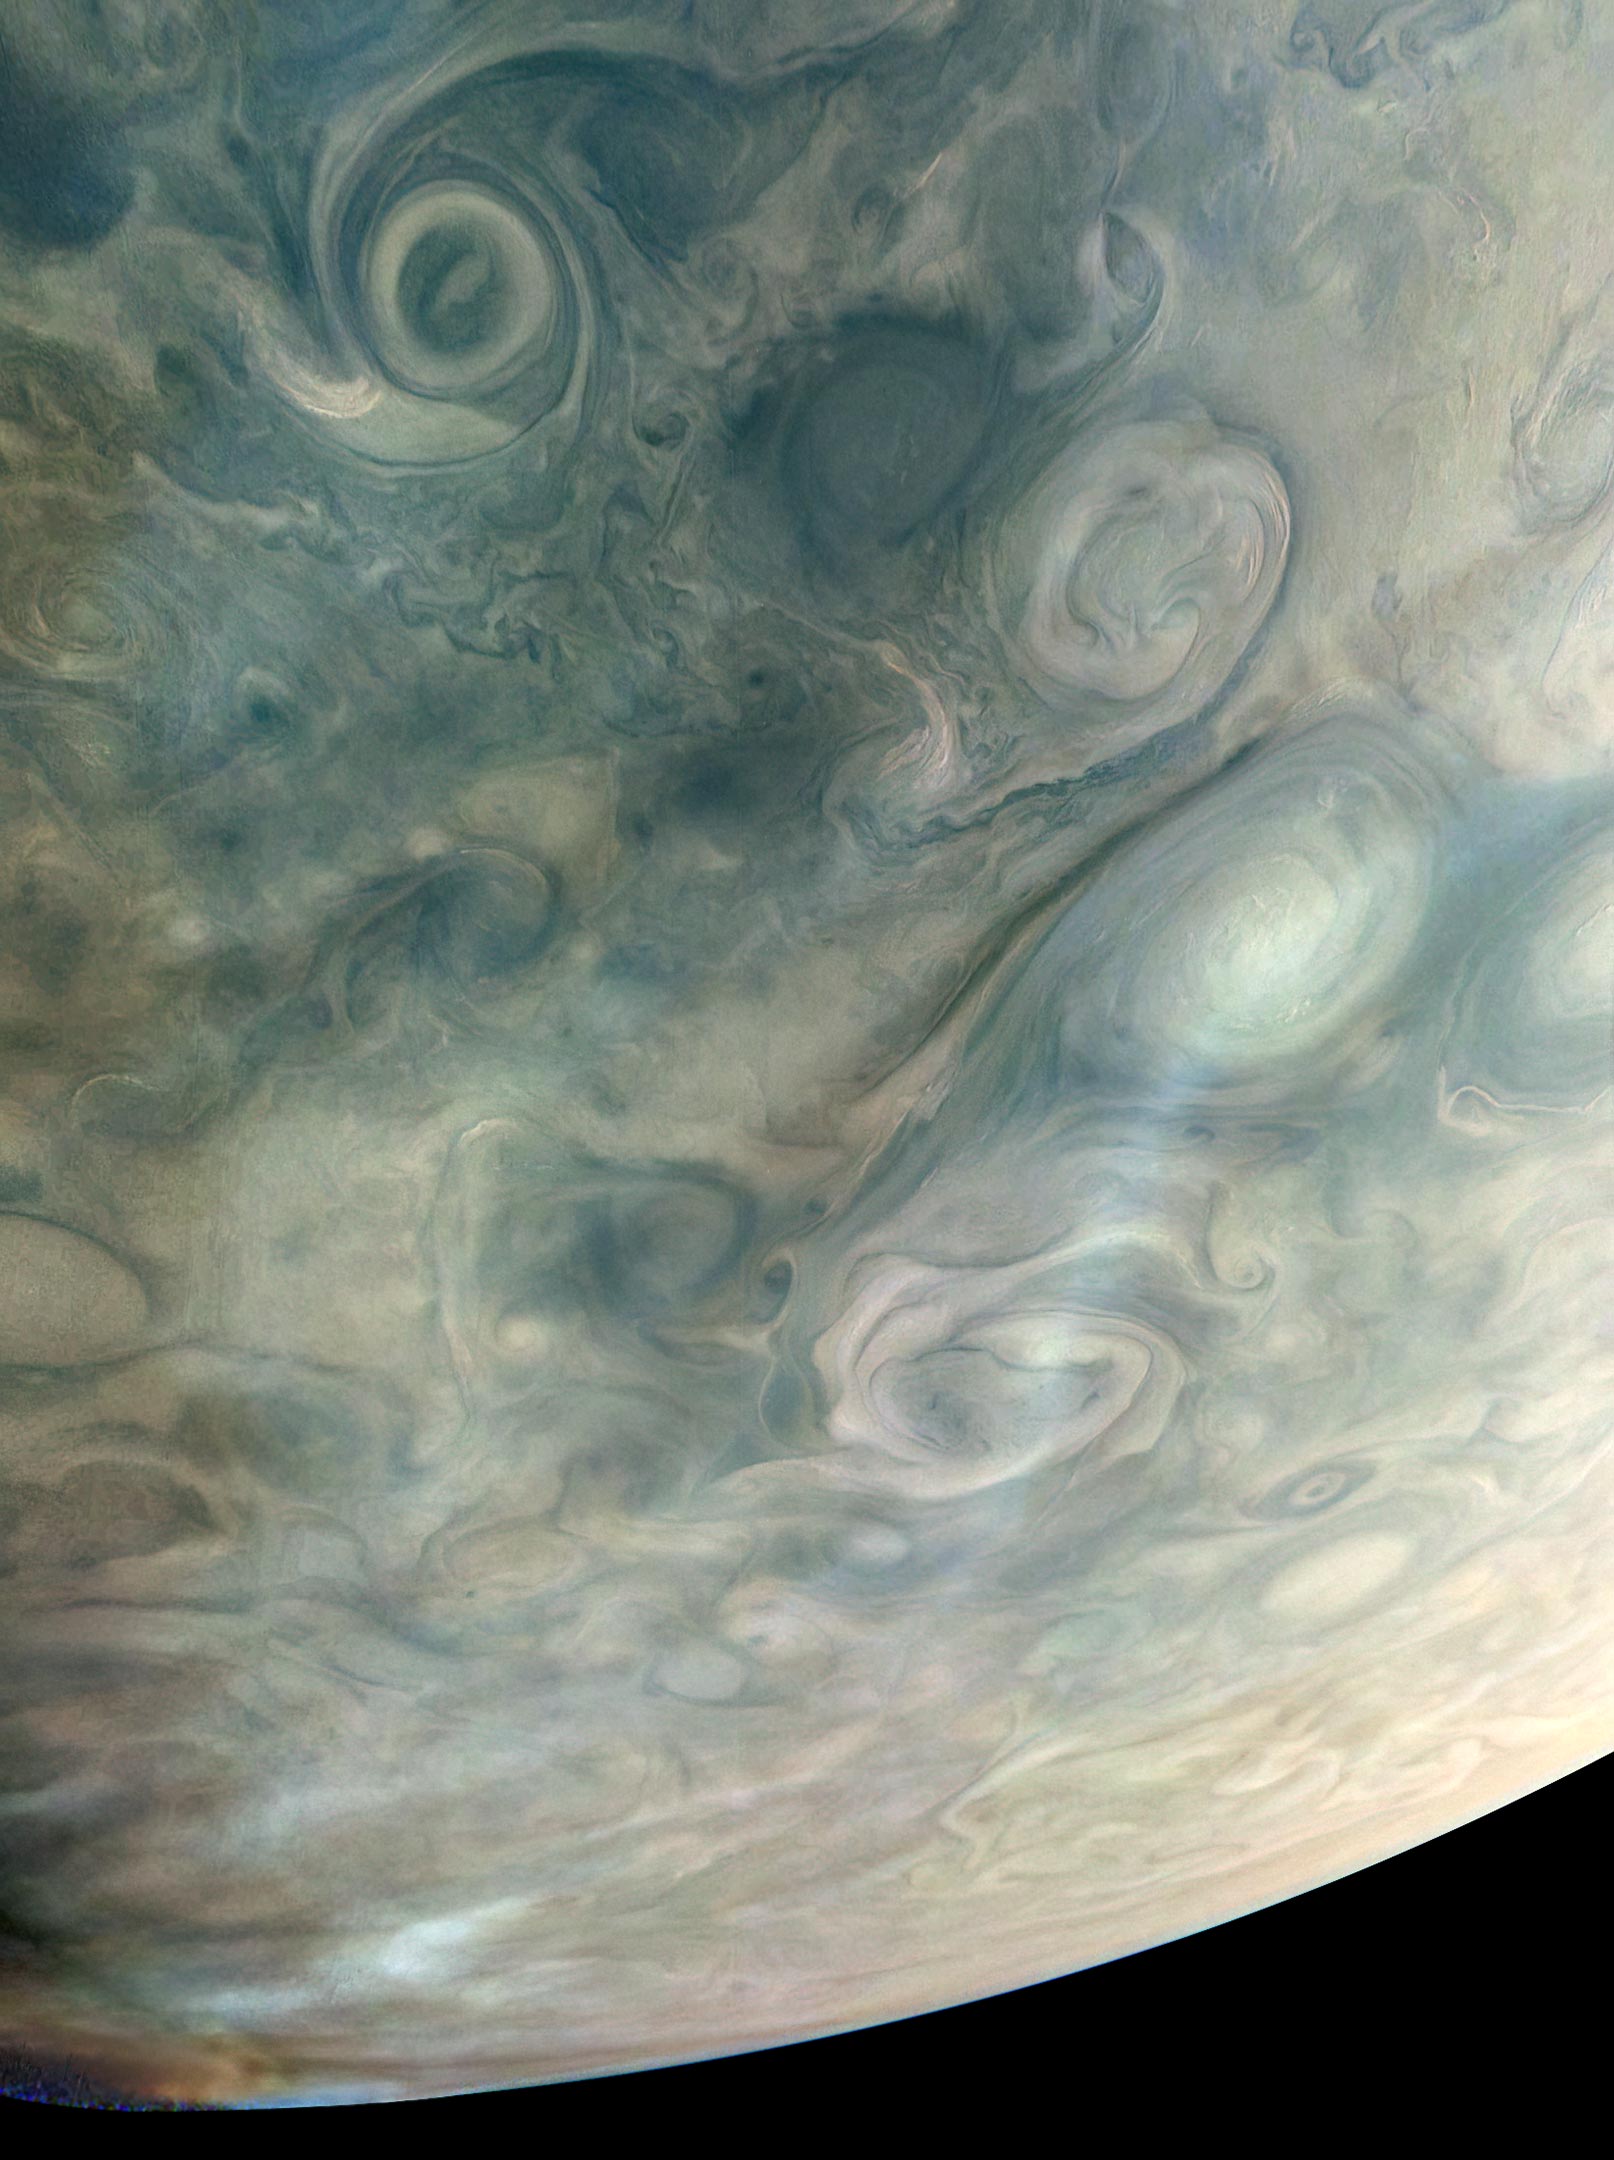 Gambar menakjubkan dari atmosfer Jupiter yang diambil oleh pesawat ruang angkasa NASA Juno mengungkapkan kabut di ketinggian